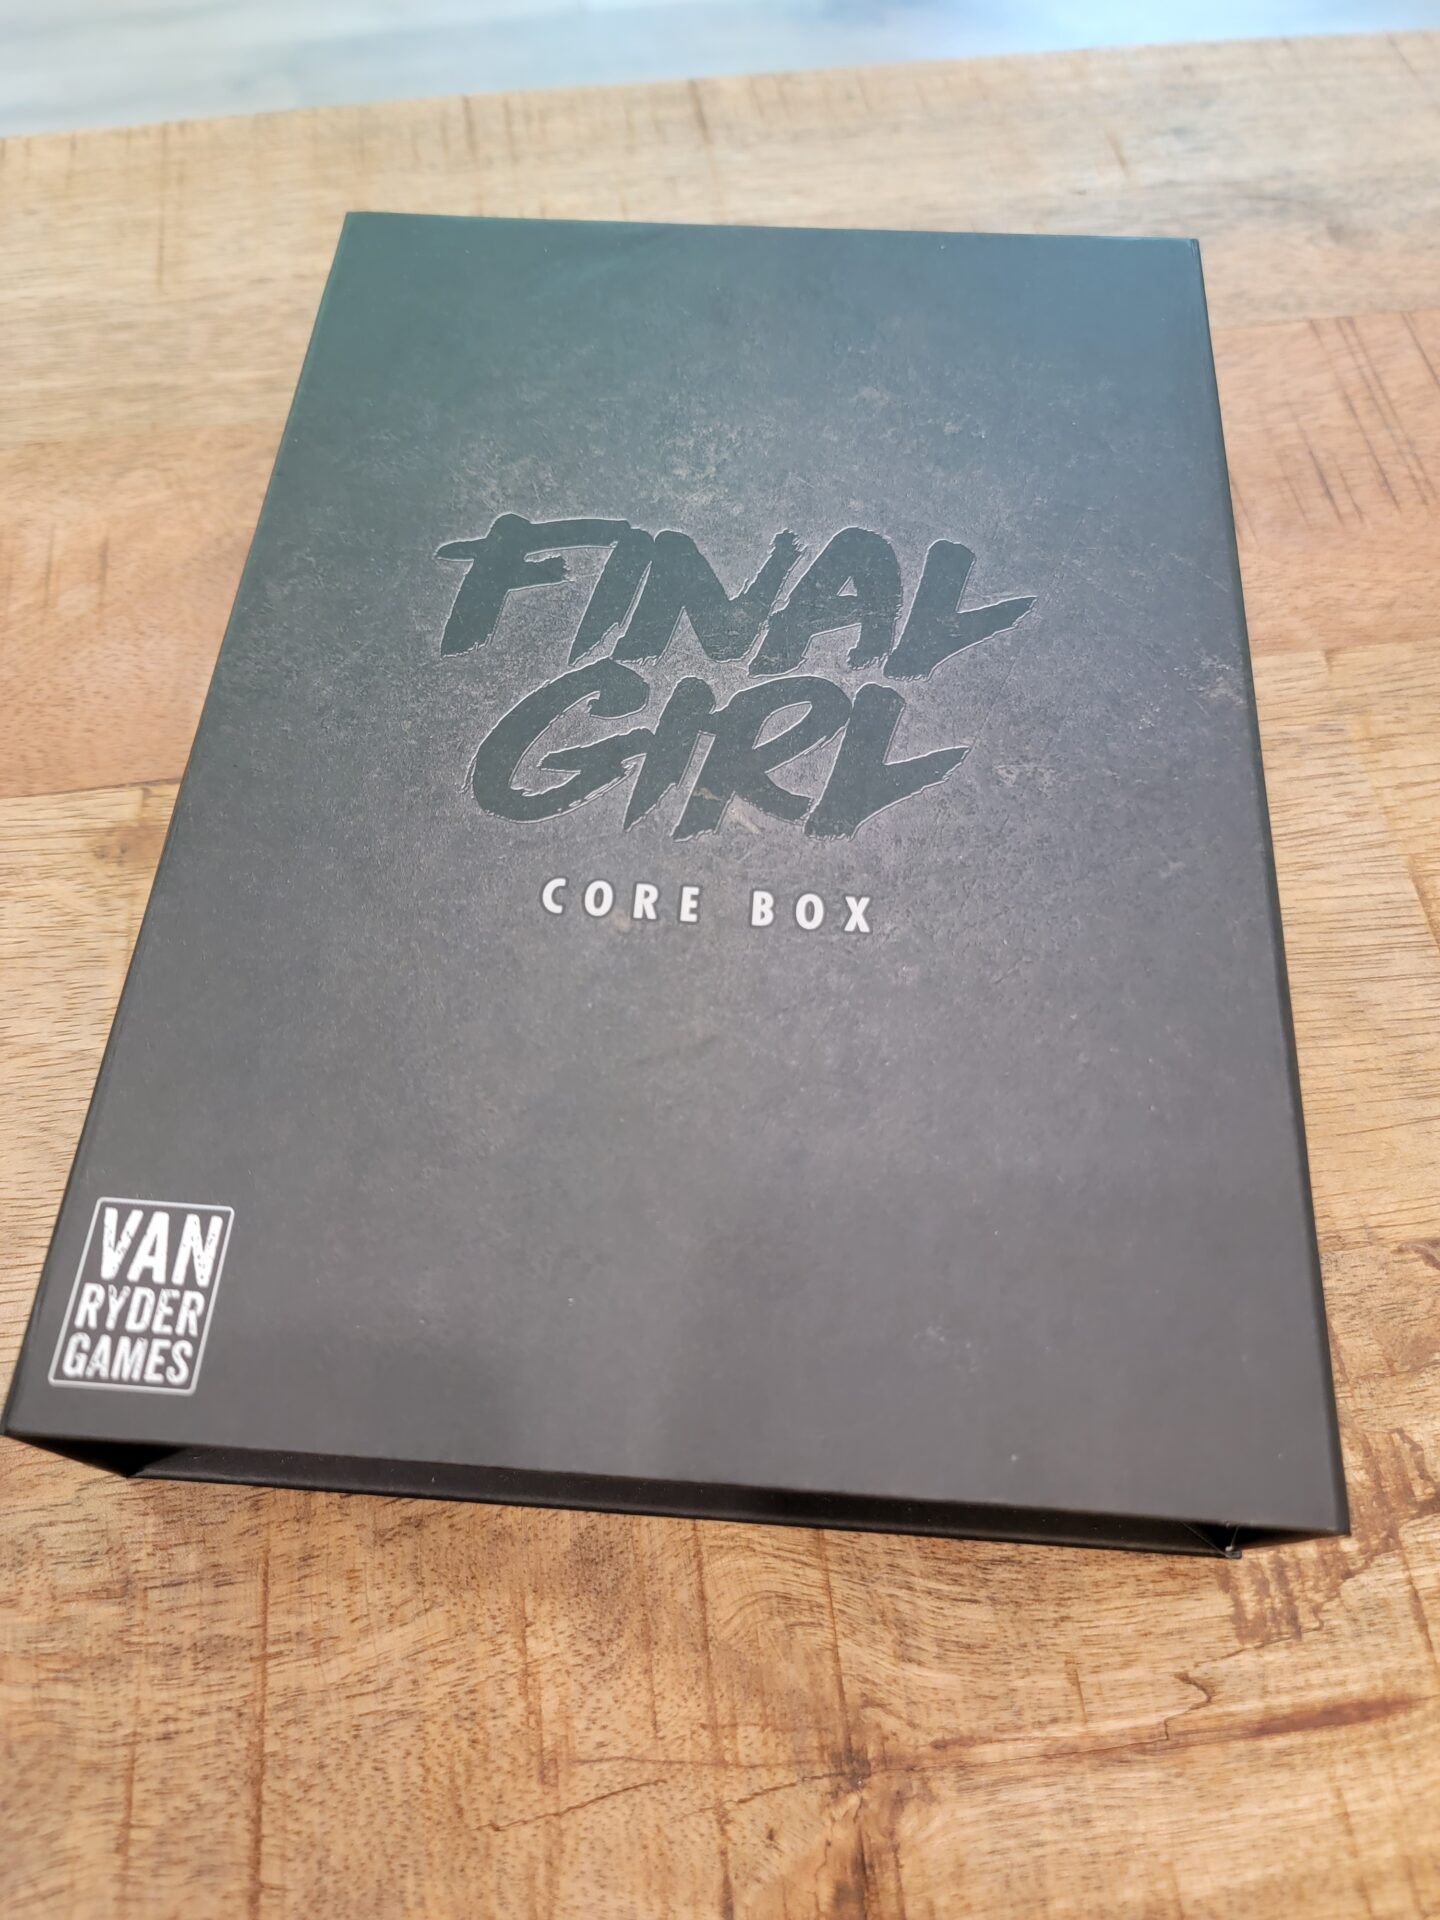 Final Girl board game box.